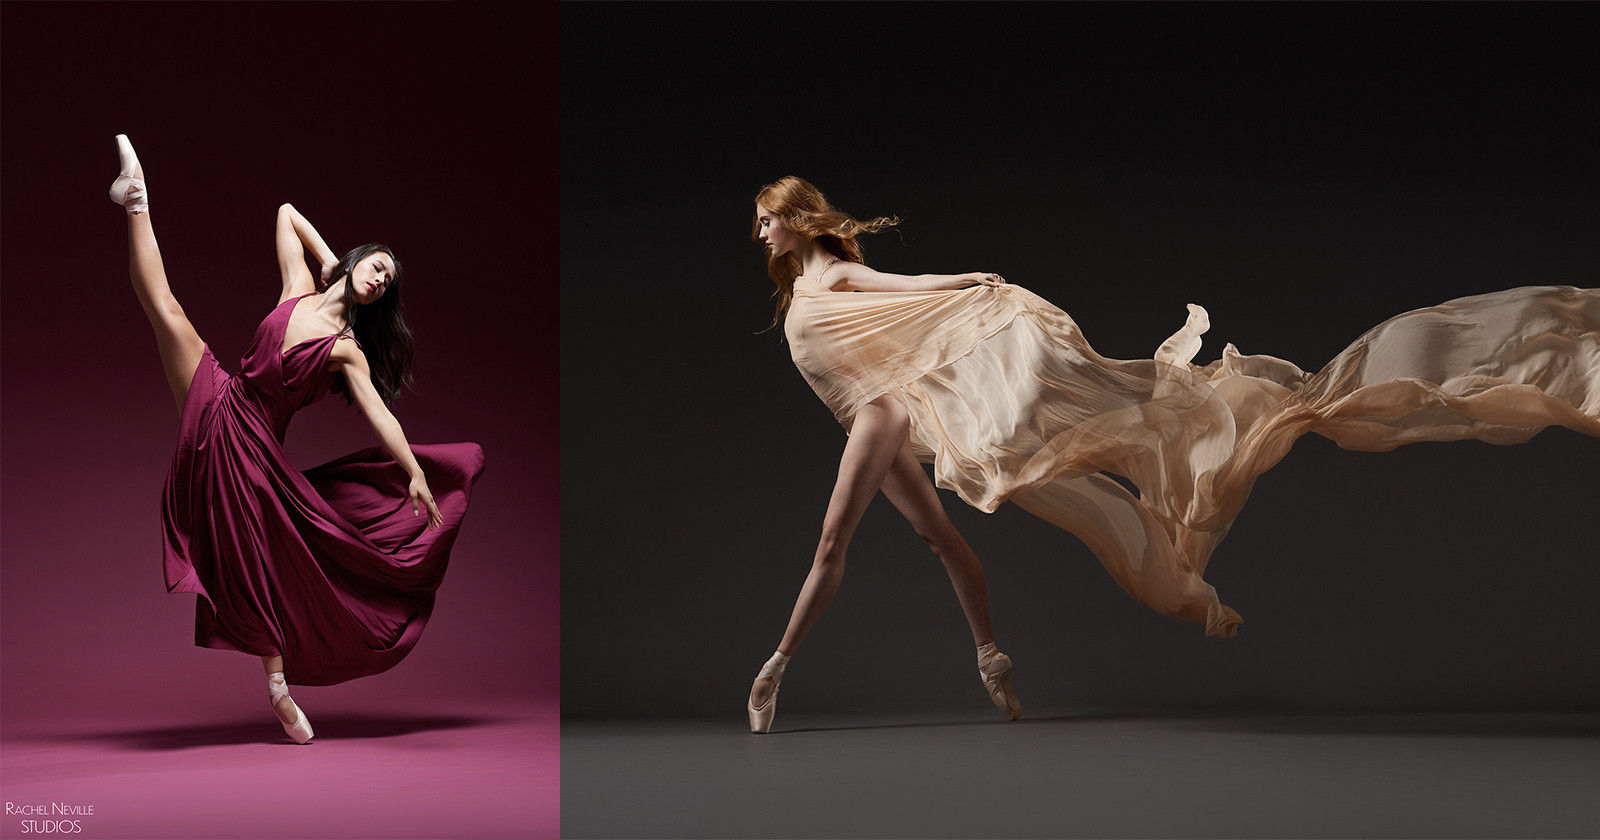  pro dancer goes from career-ending injury master photographer 